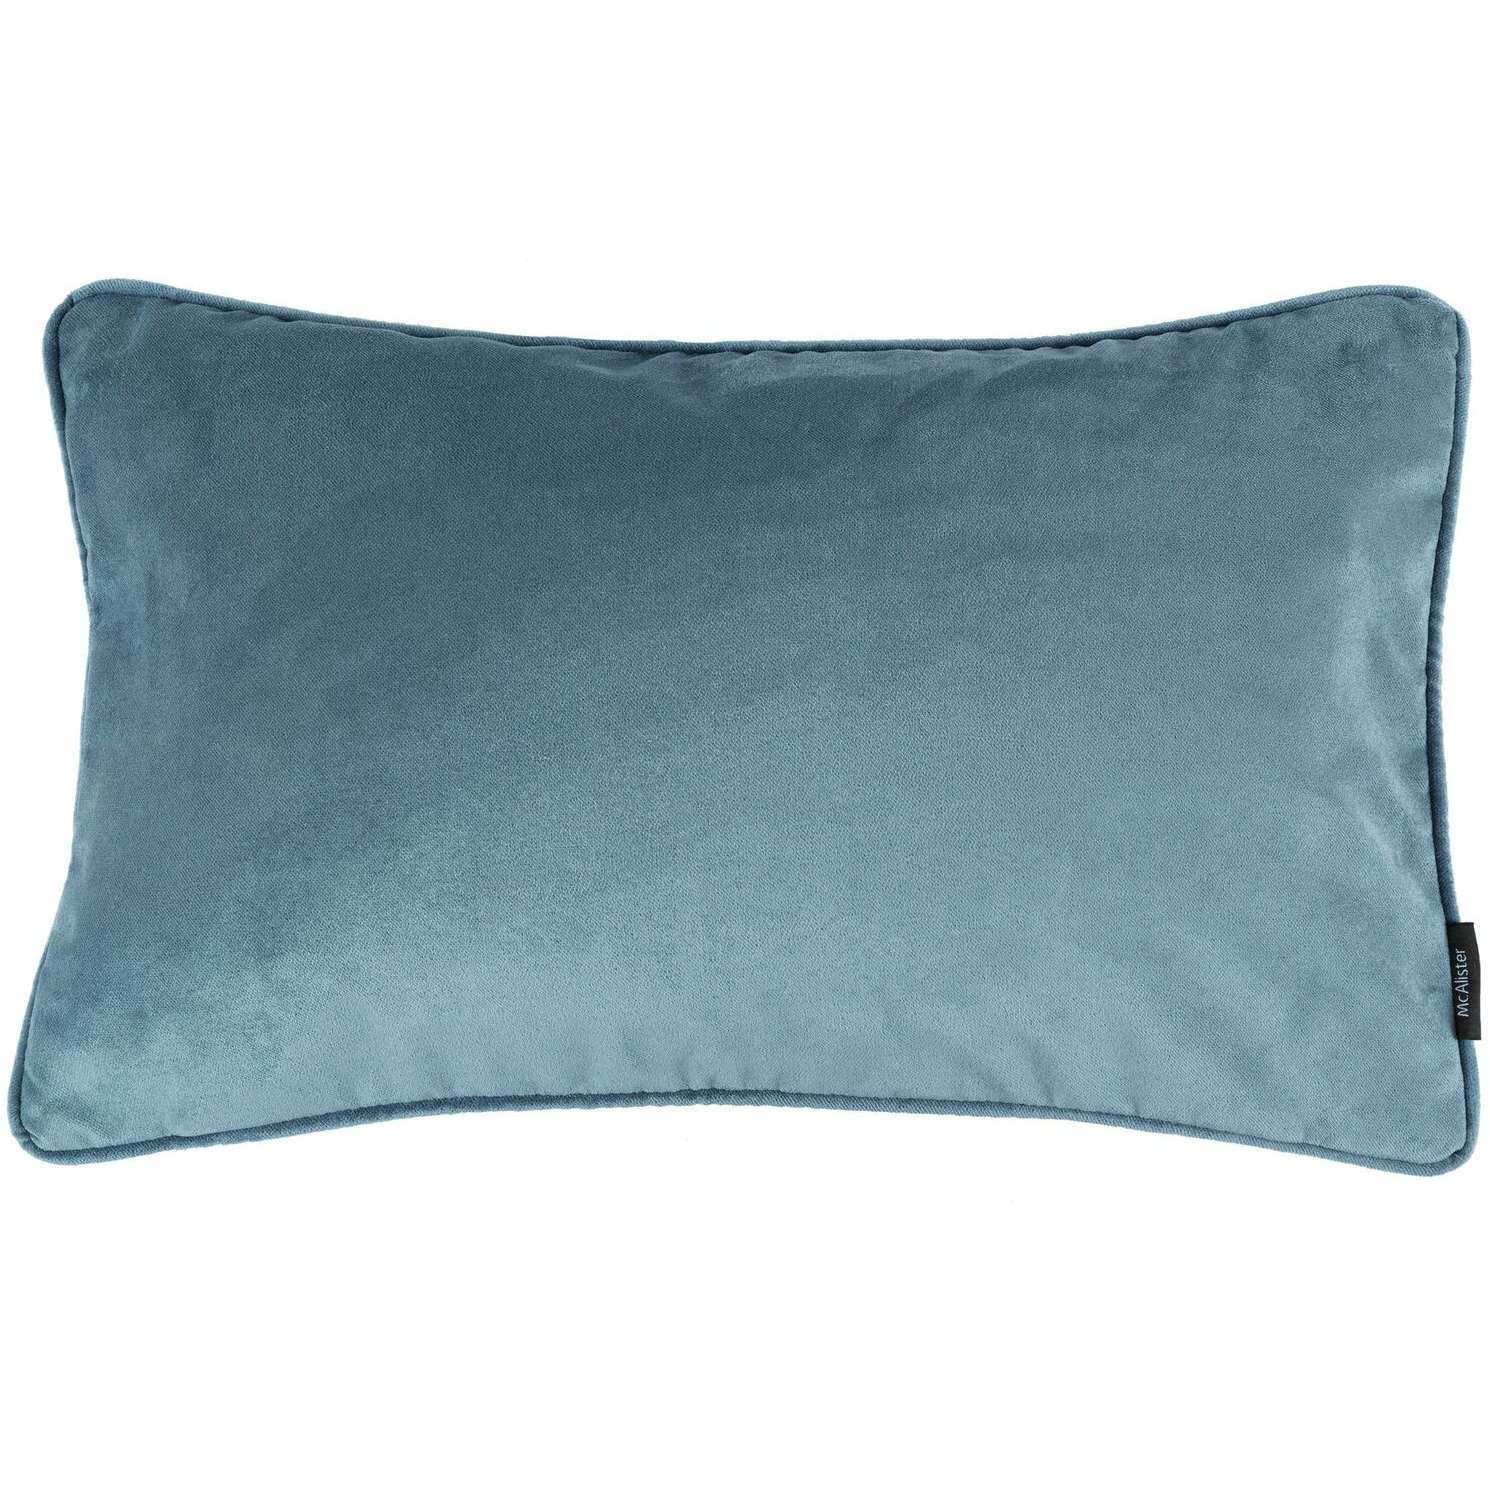 McAlister Textiles Matt Petrol Blue Piped Velvet Pillow Pillow Cover Only 50cm x 30cm 